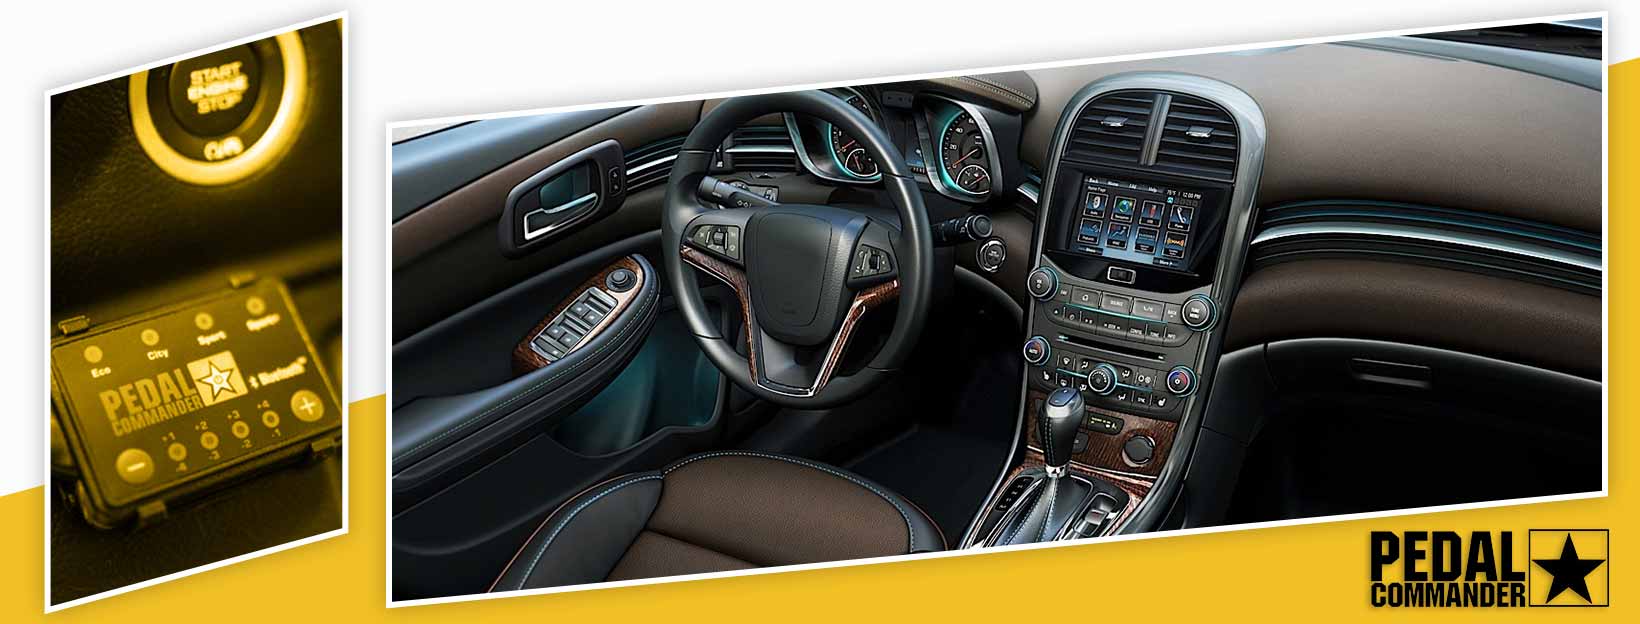 Pedal Commander for Chevrolet Malibu - interior